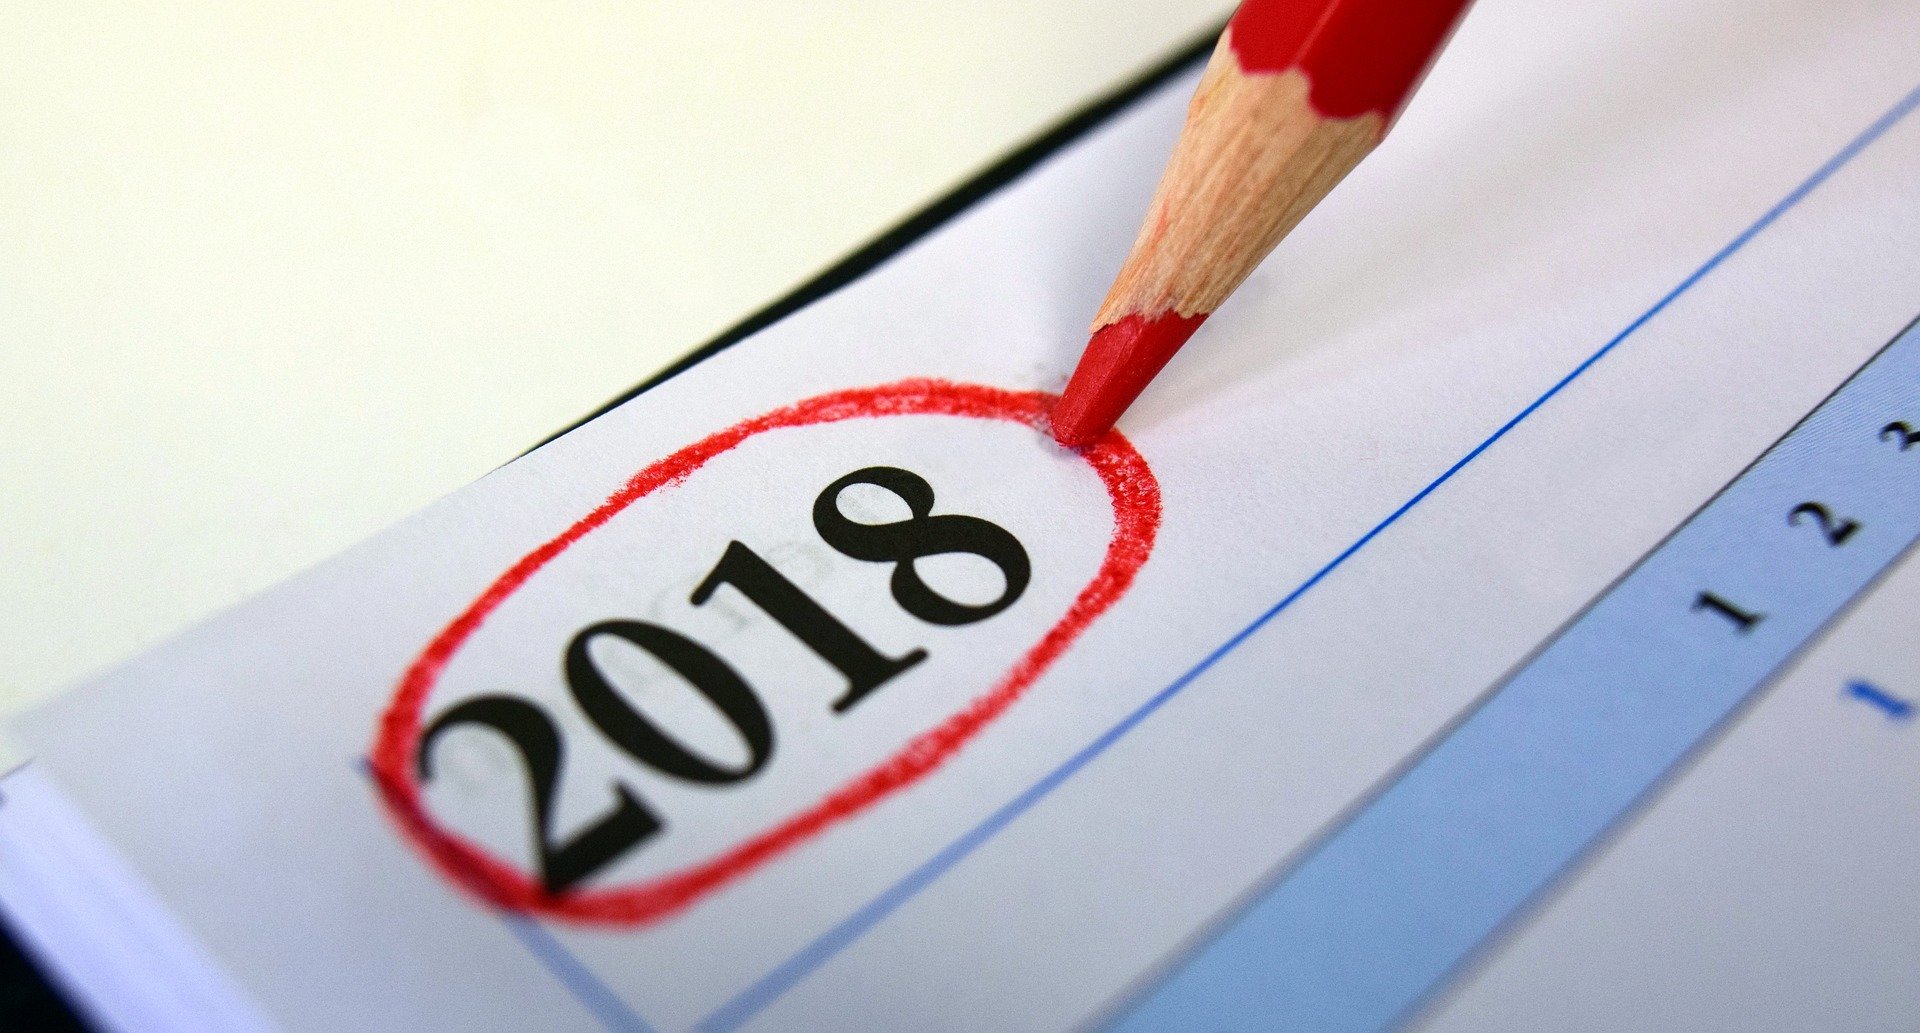 2018 Calendar circled in red pencil